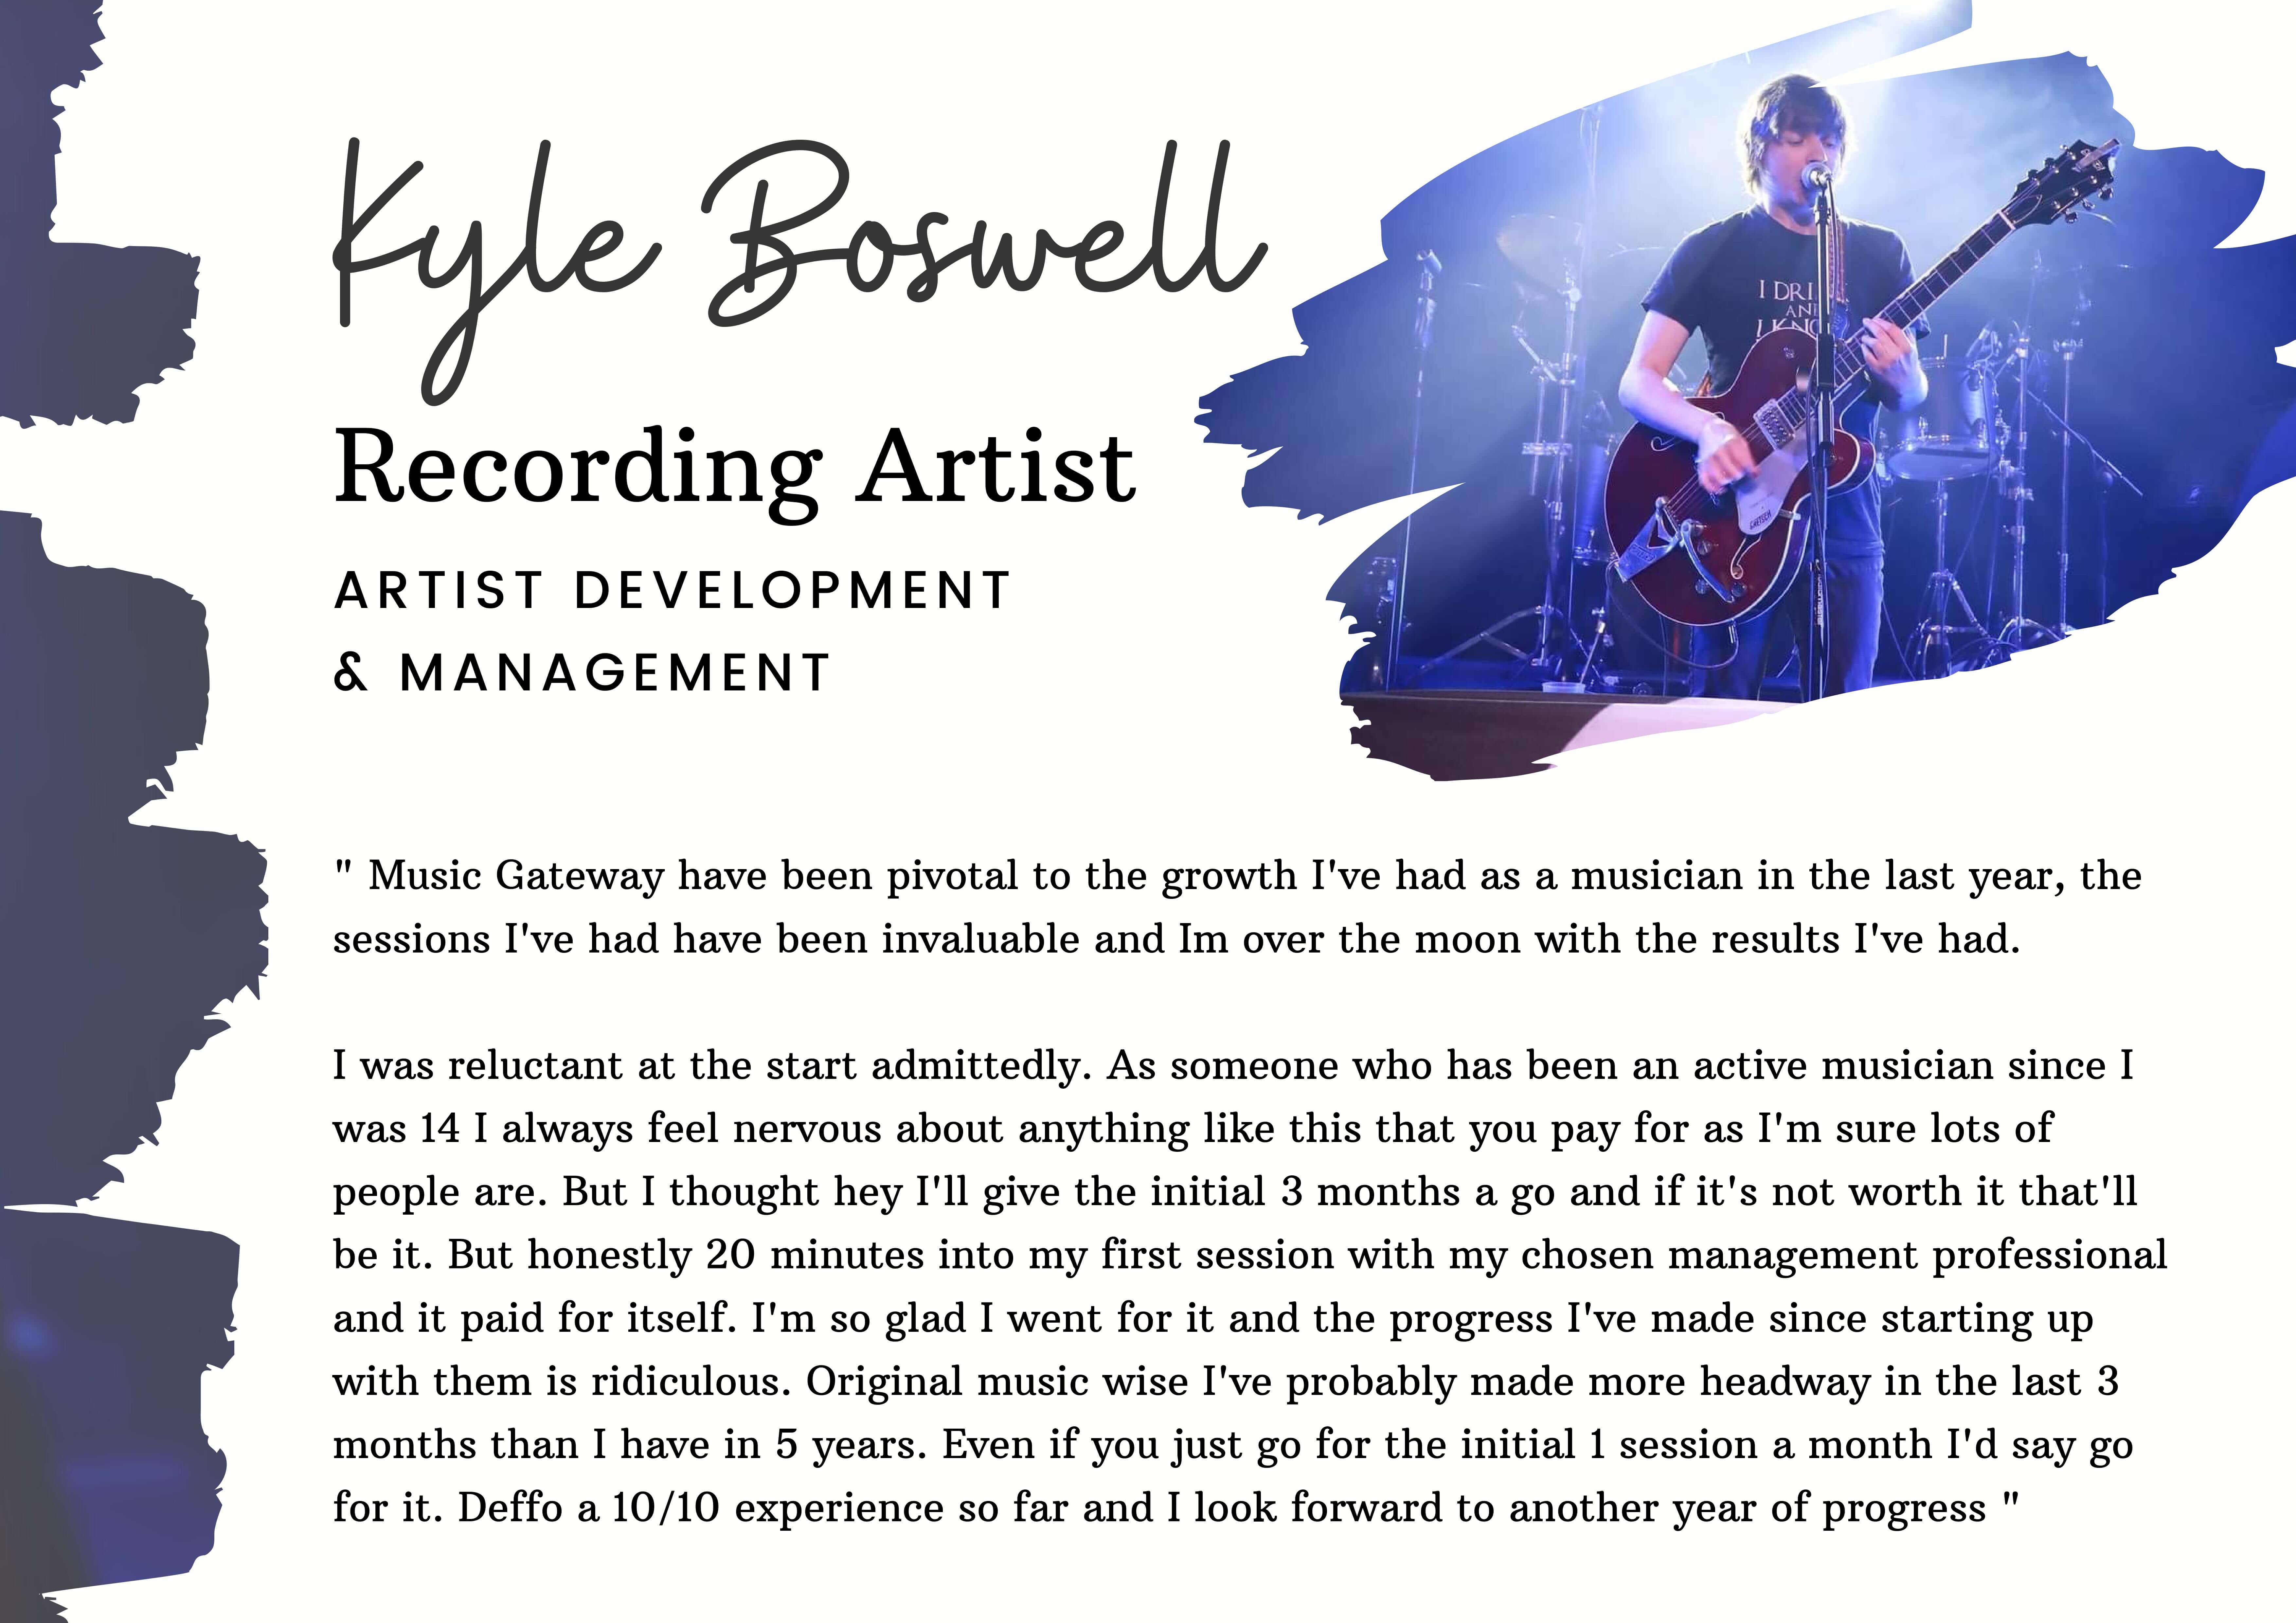 MG Artist Kyle-Boswell